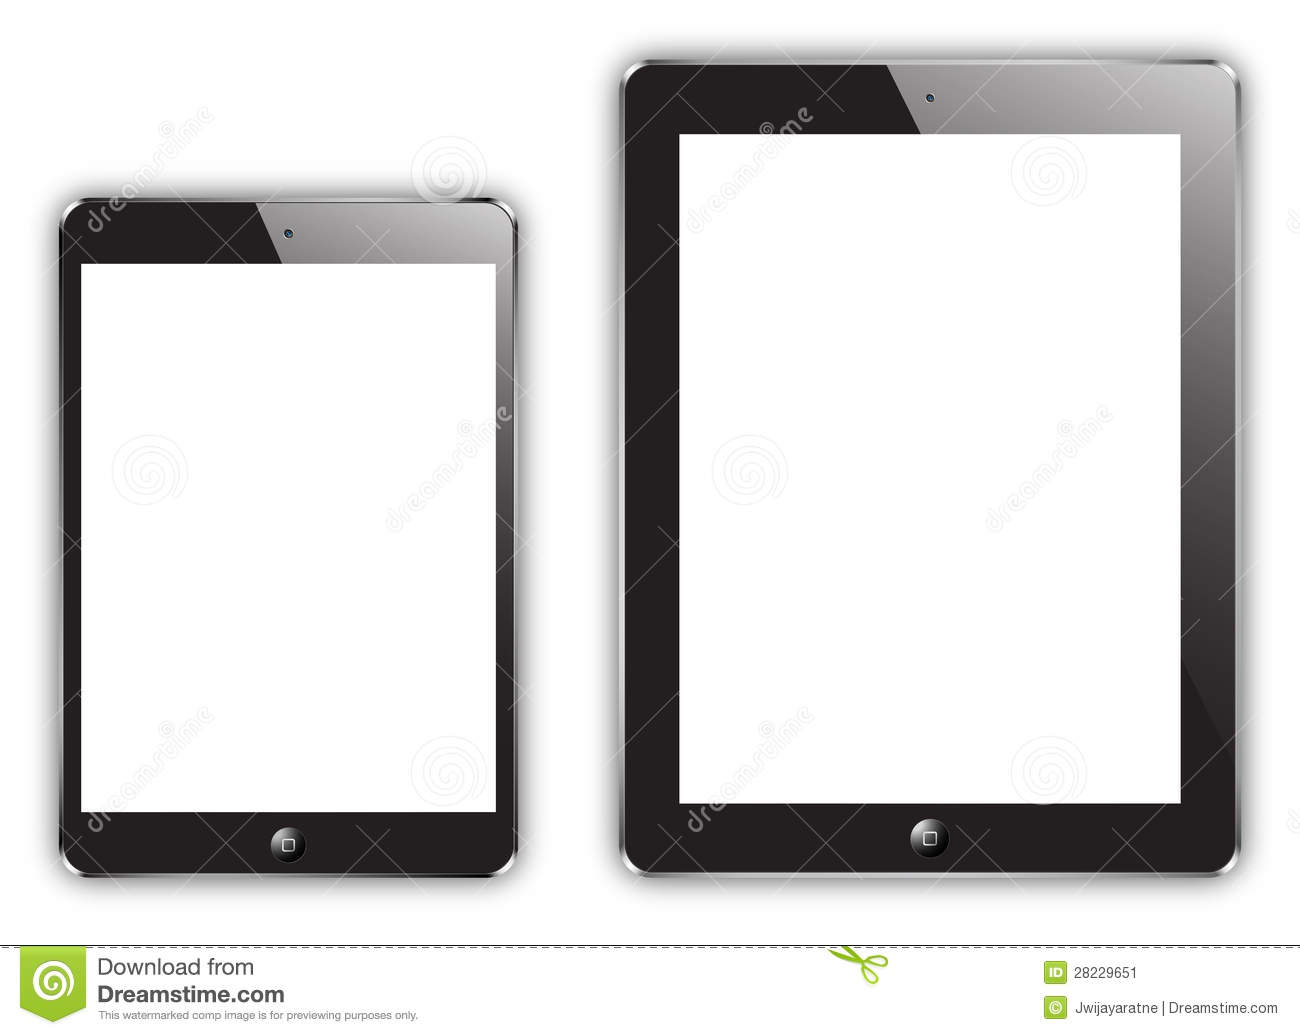 New Ipad Mini   Ipad Illustration For Designing Purposes